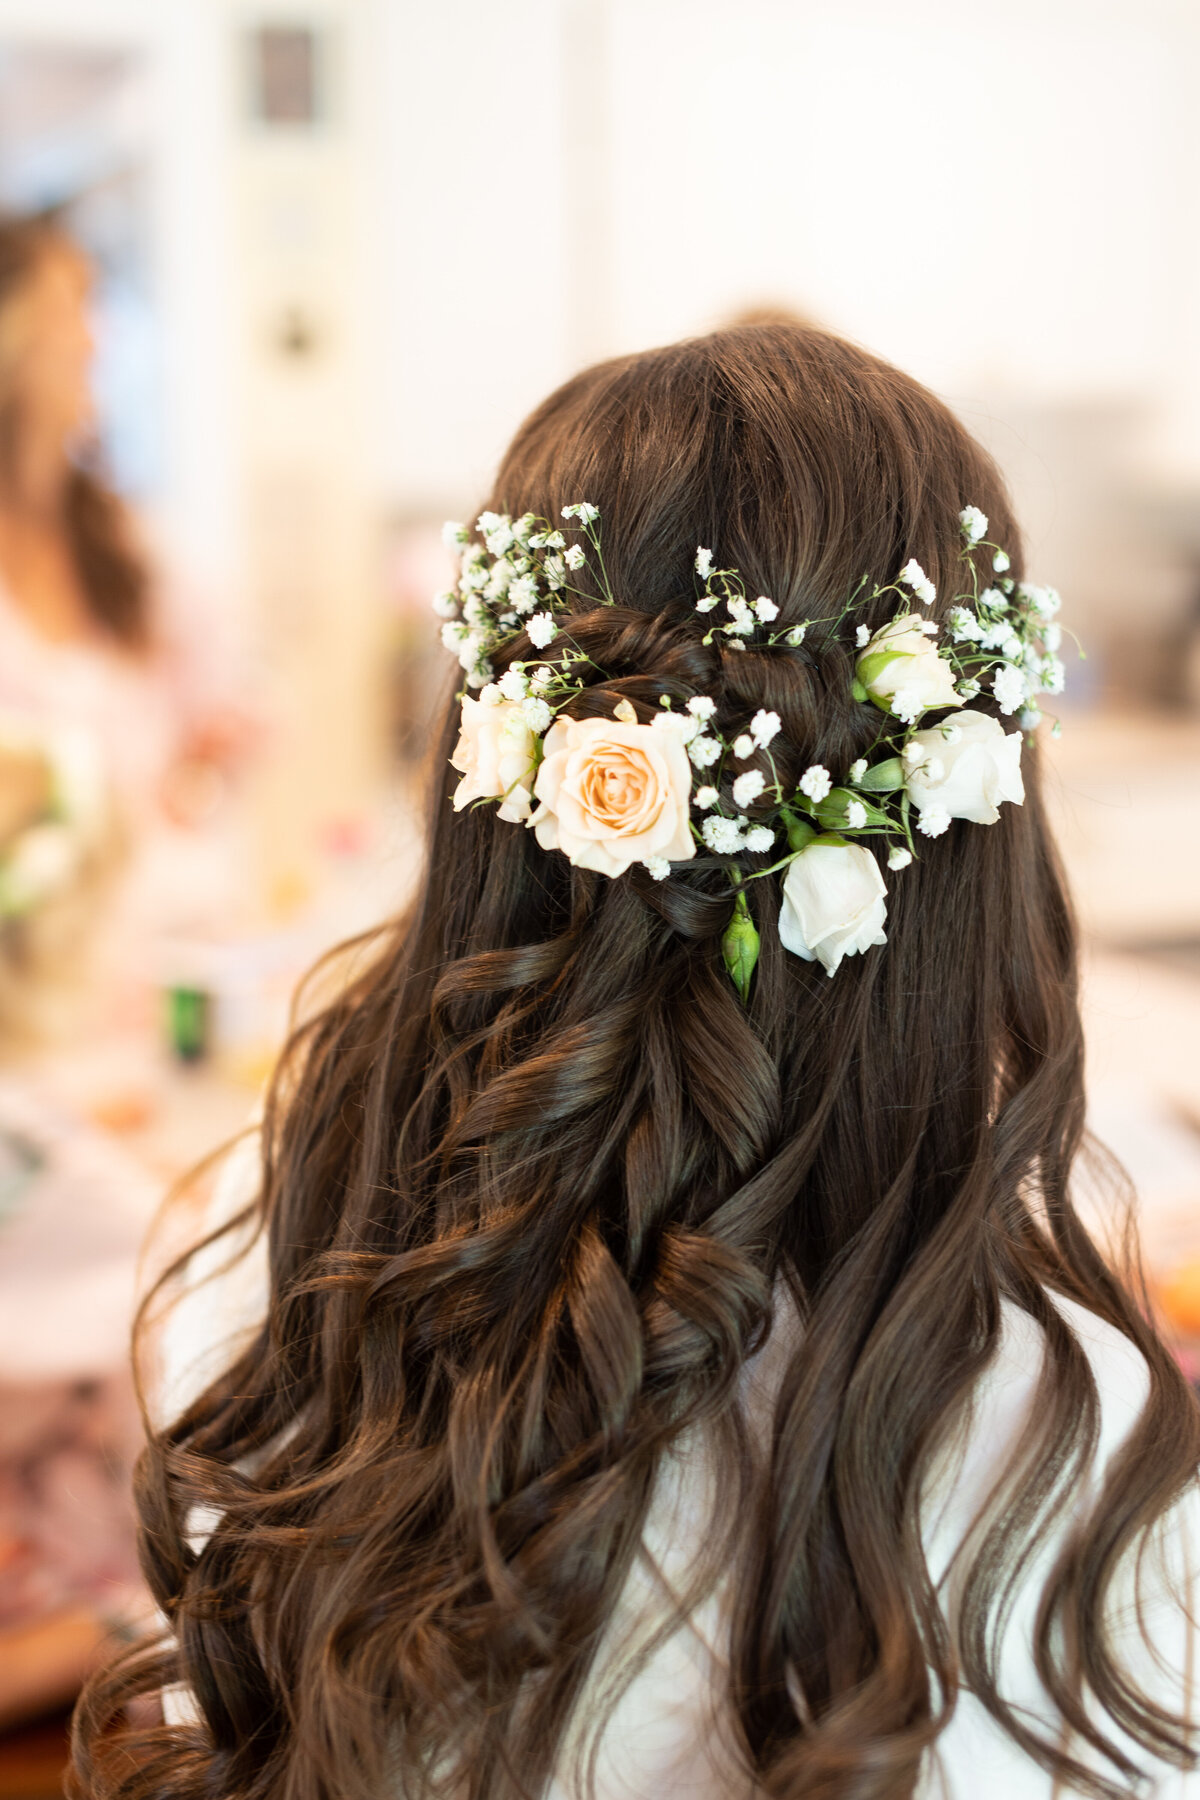 Brides wedding hair crown